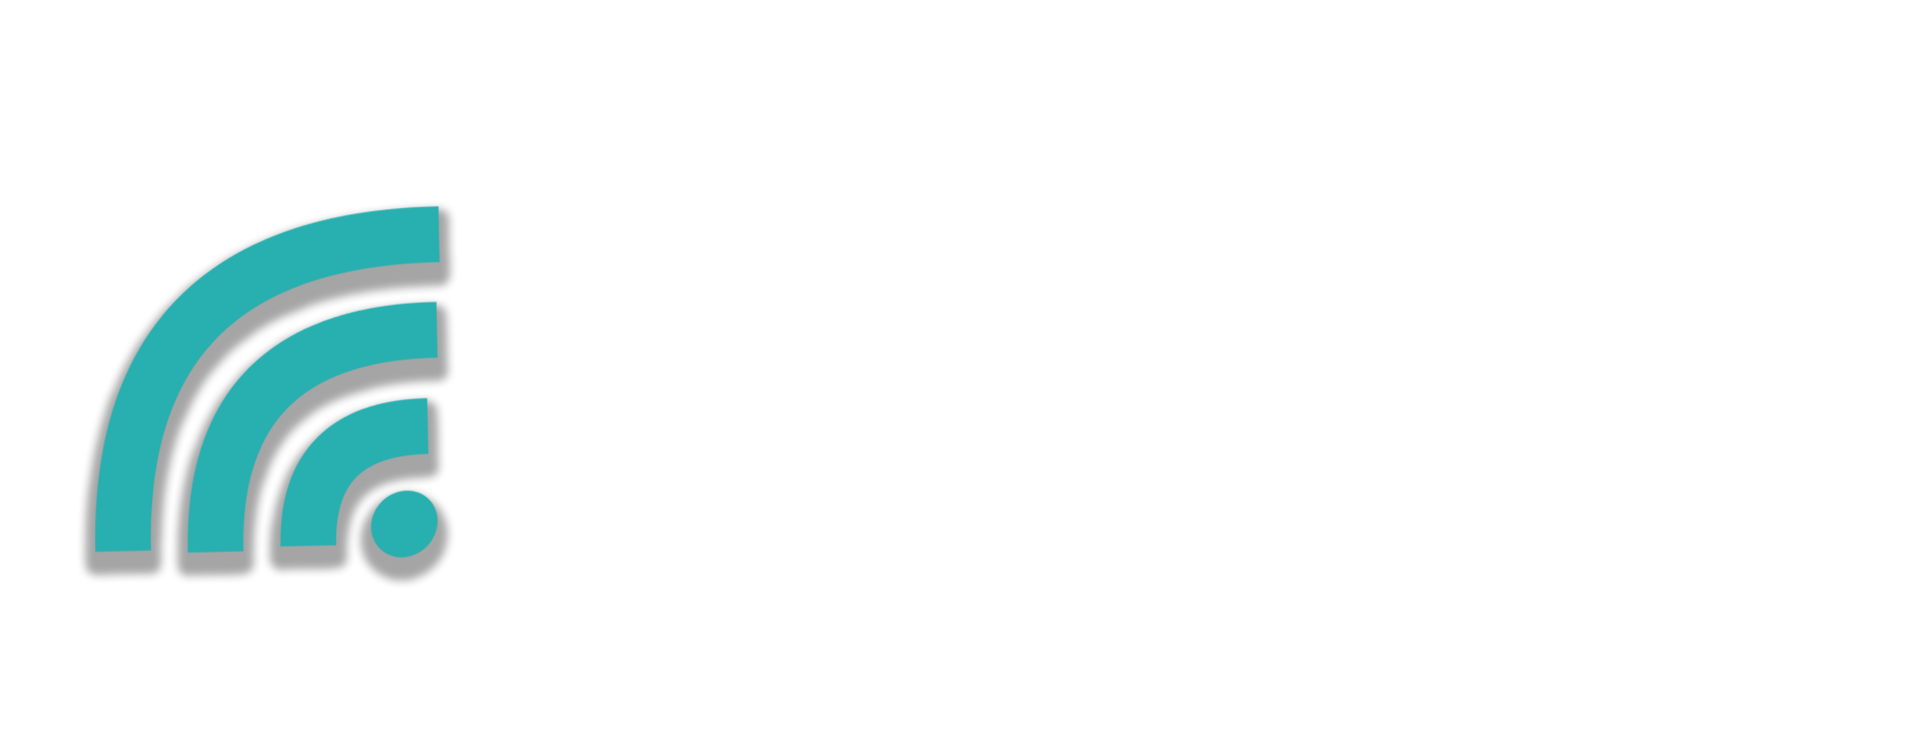 S&S Aerials Ltd. Logo